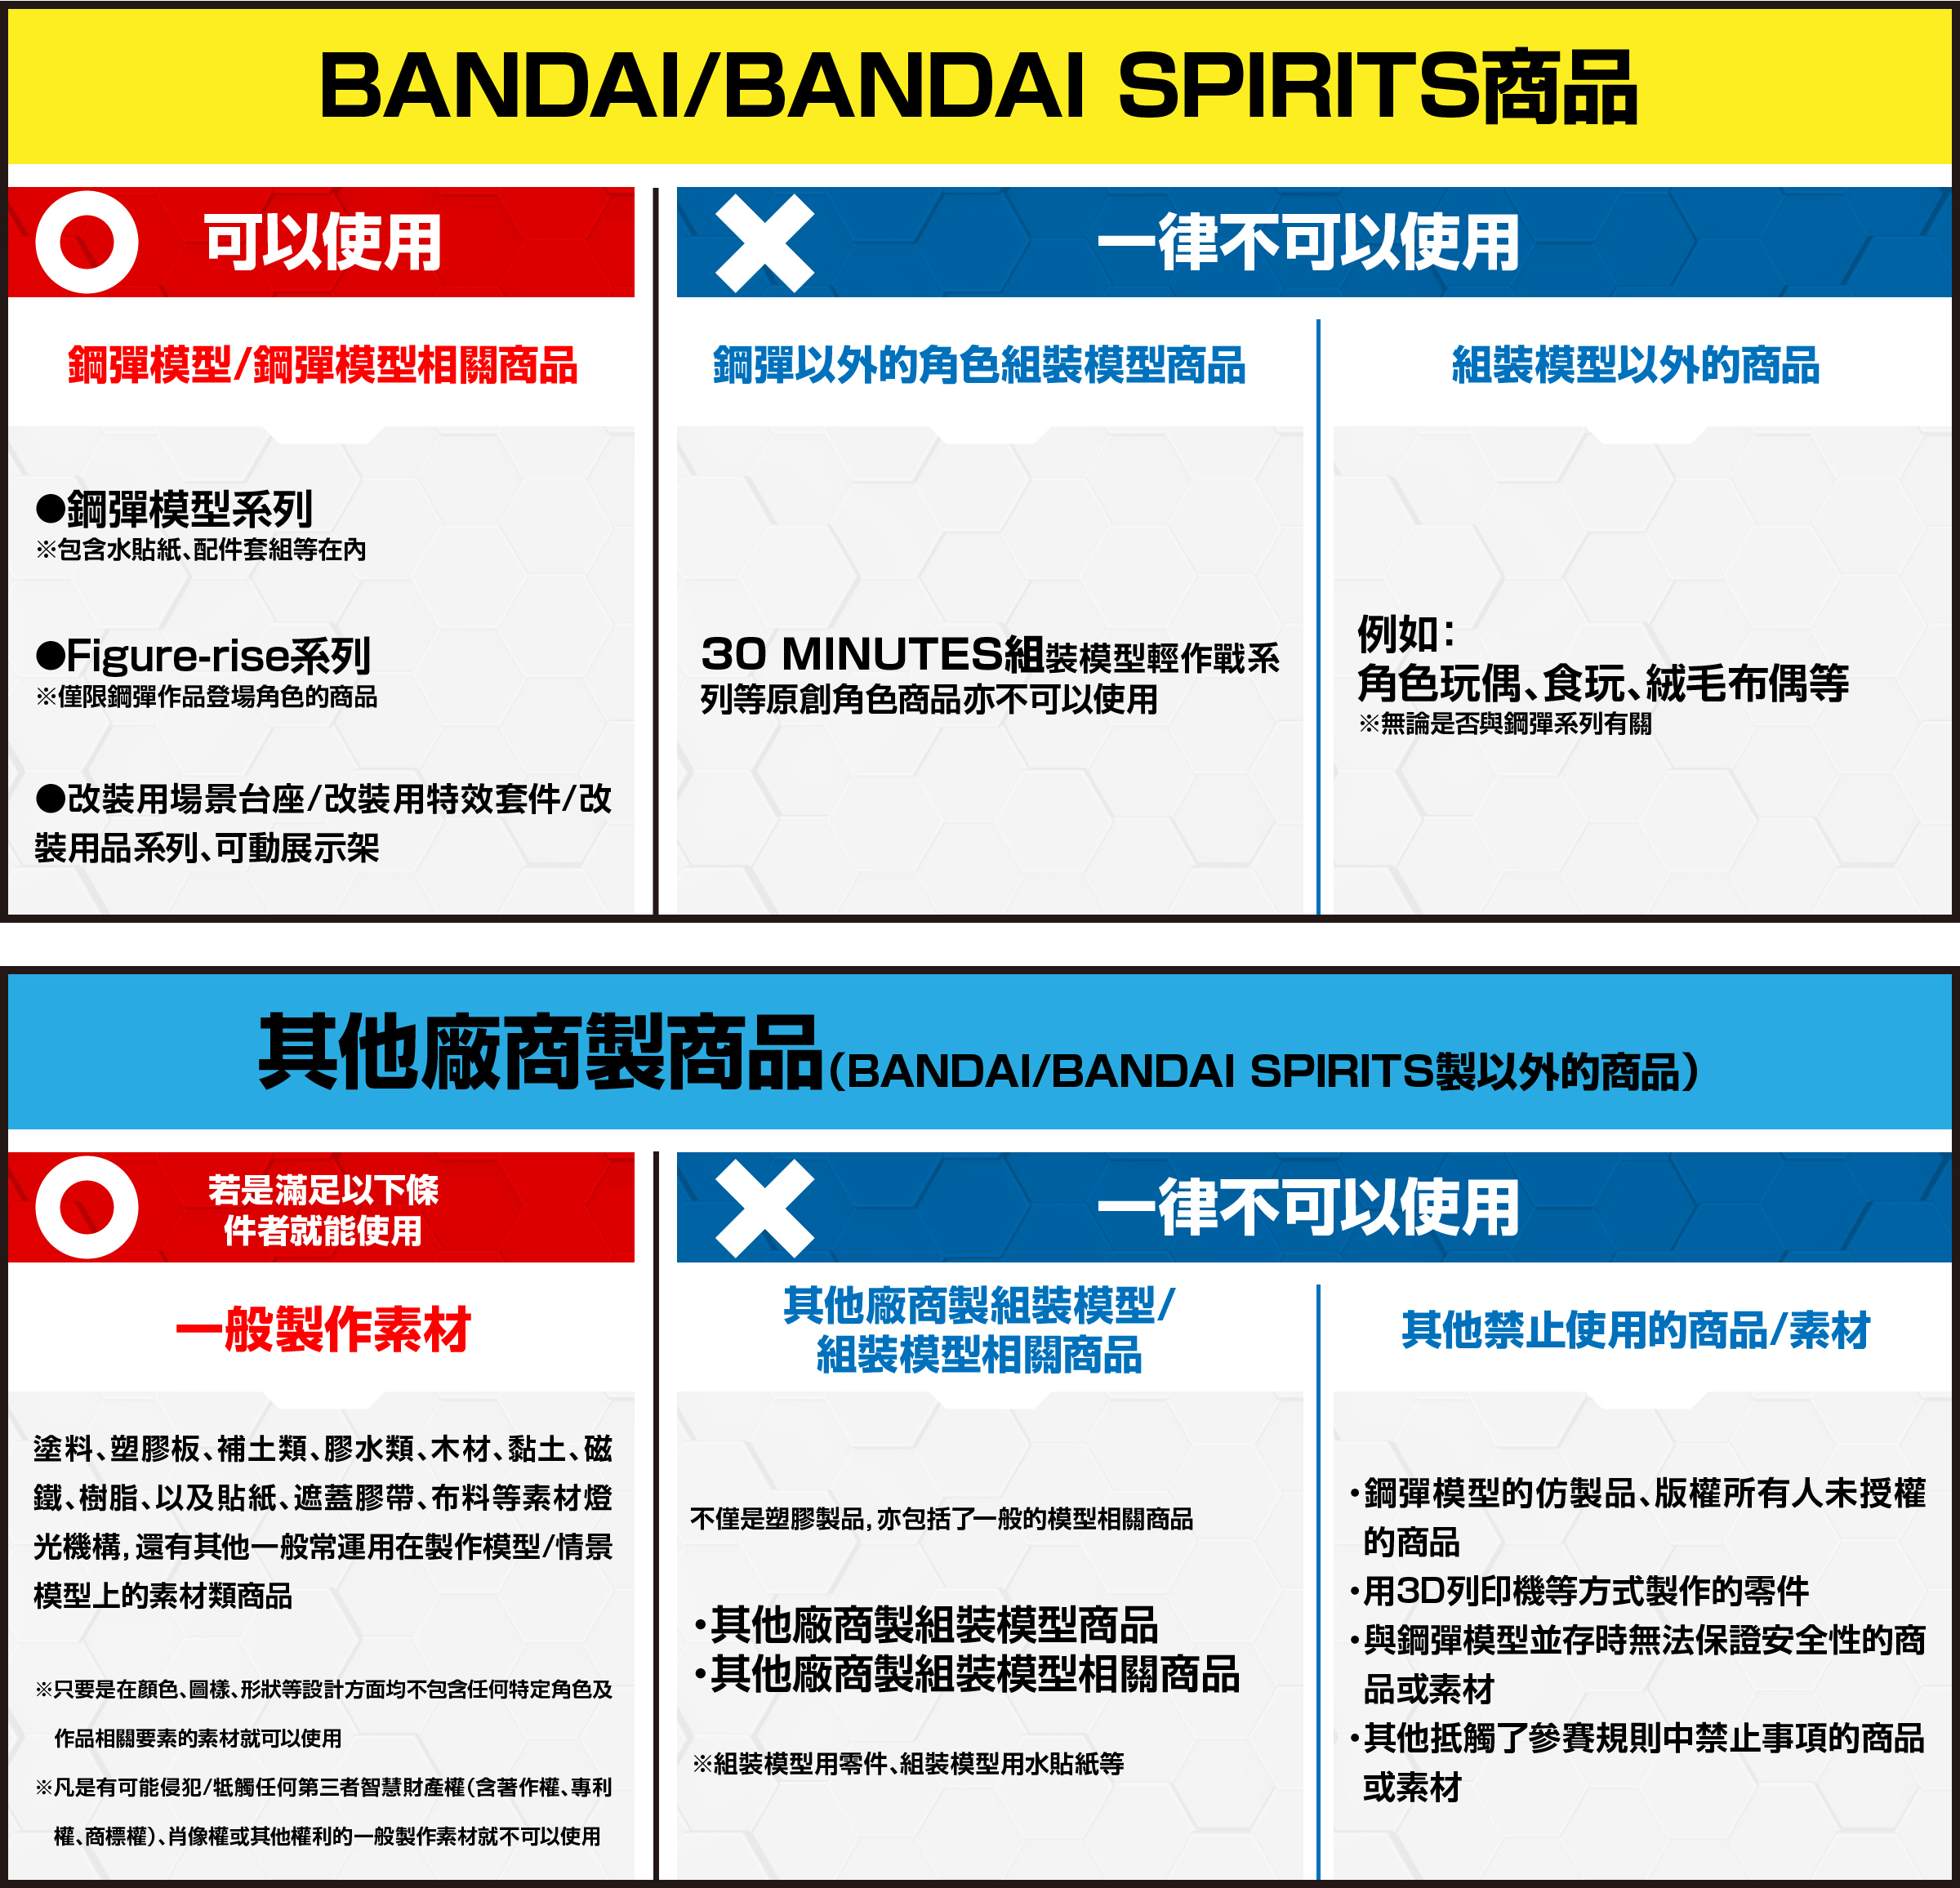 BANDAI/BANDAI SPIRITS商品